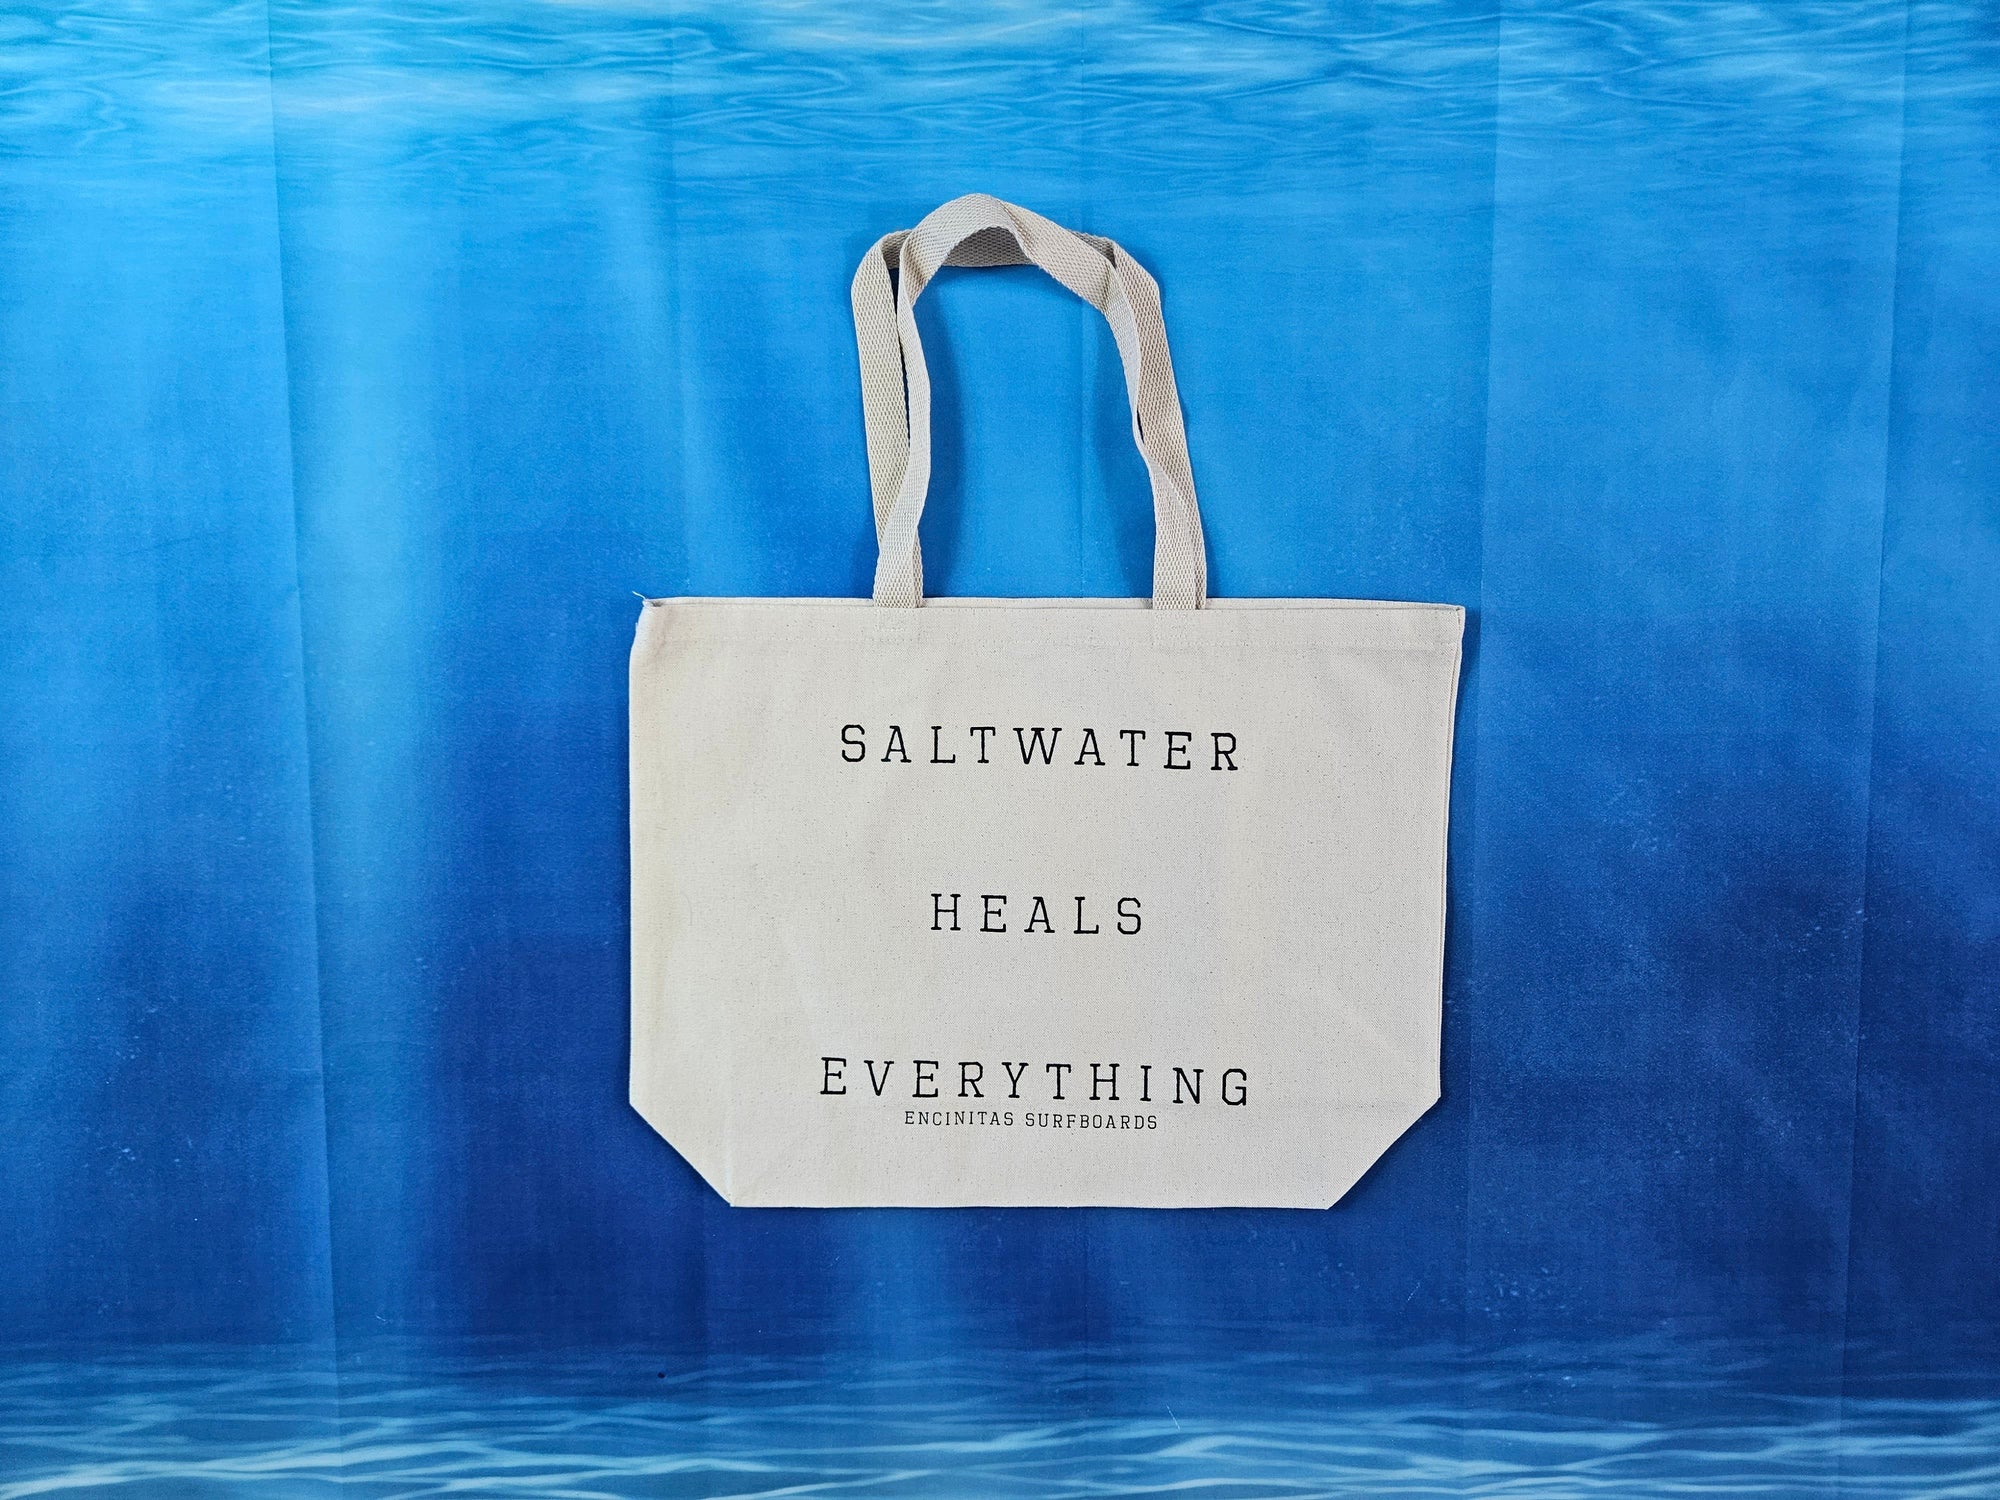 Saltwater Heals Cotton Canvas Tote-Coastal Classics-Bag,beach bag,encinitas,encinitas surfboards,recycled,reusable,shopping bag,tote